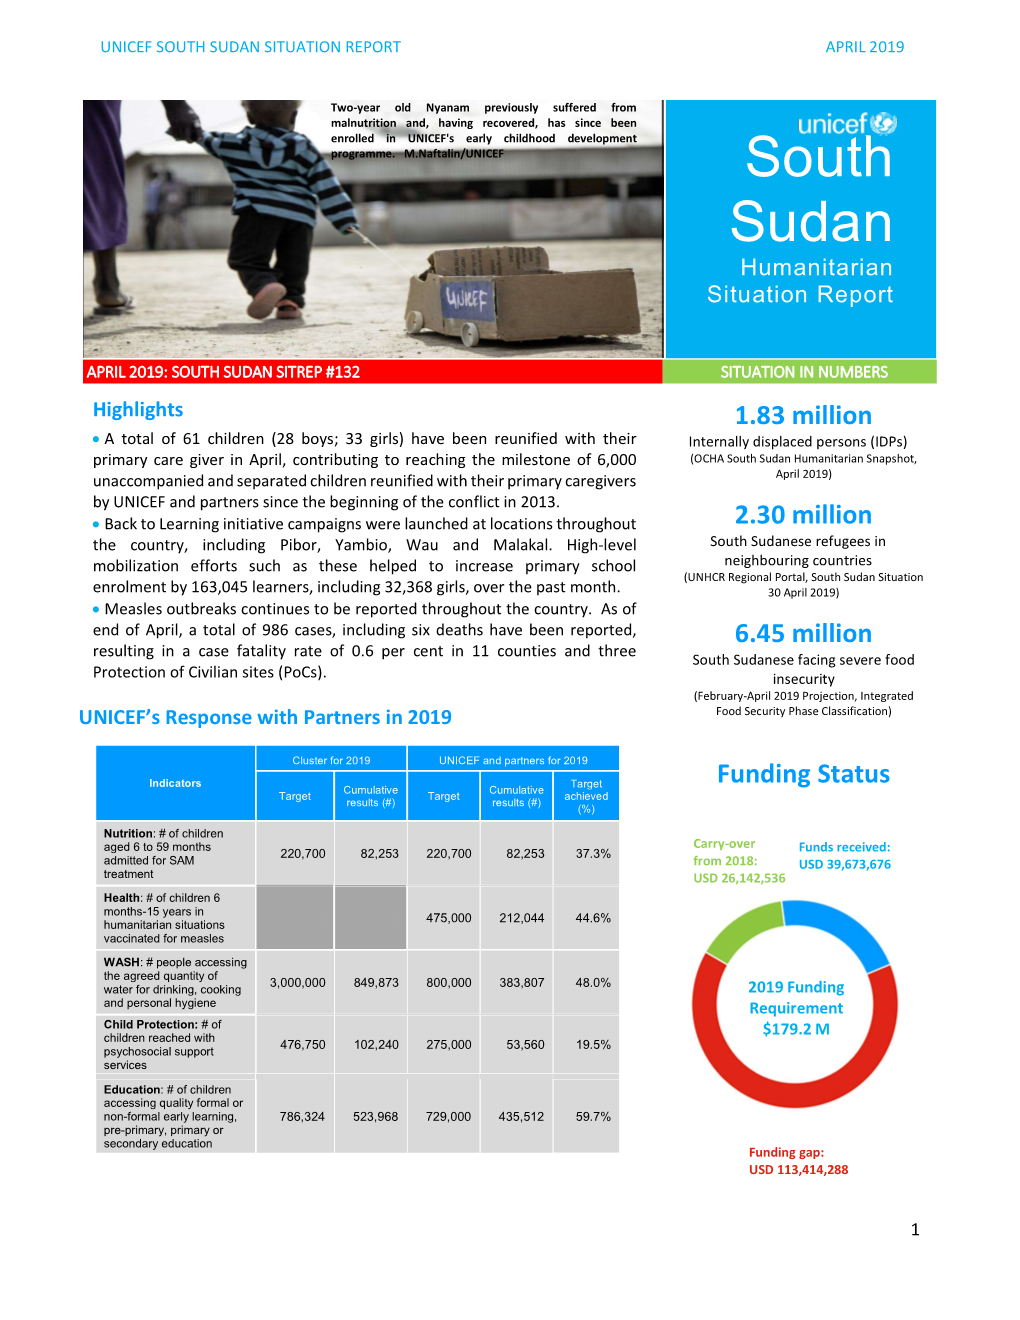 South Sudan Situation Report April 2019